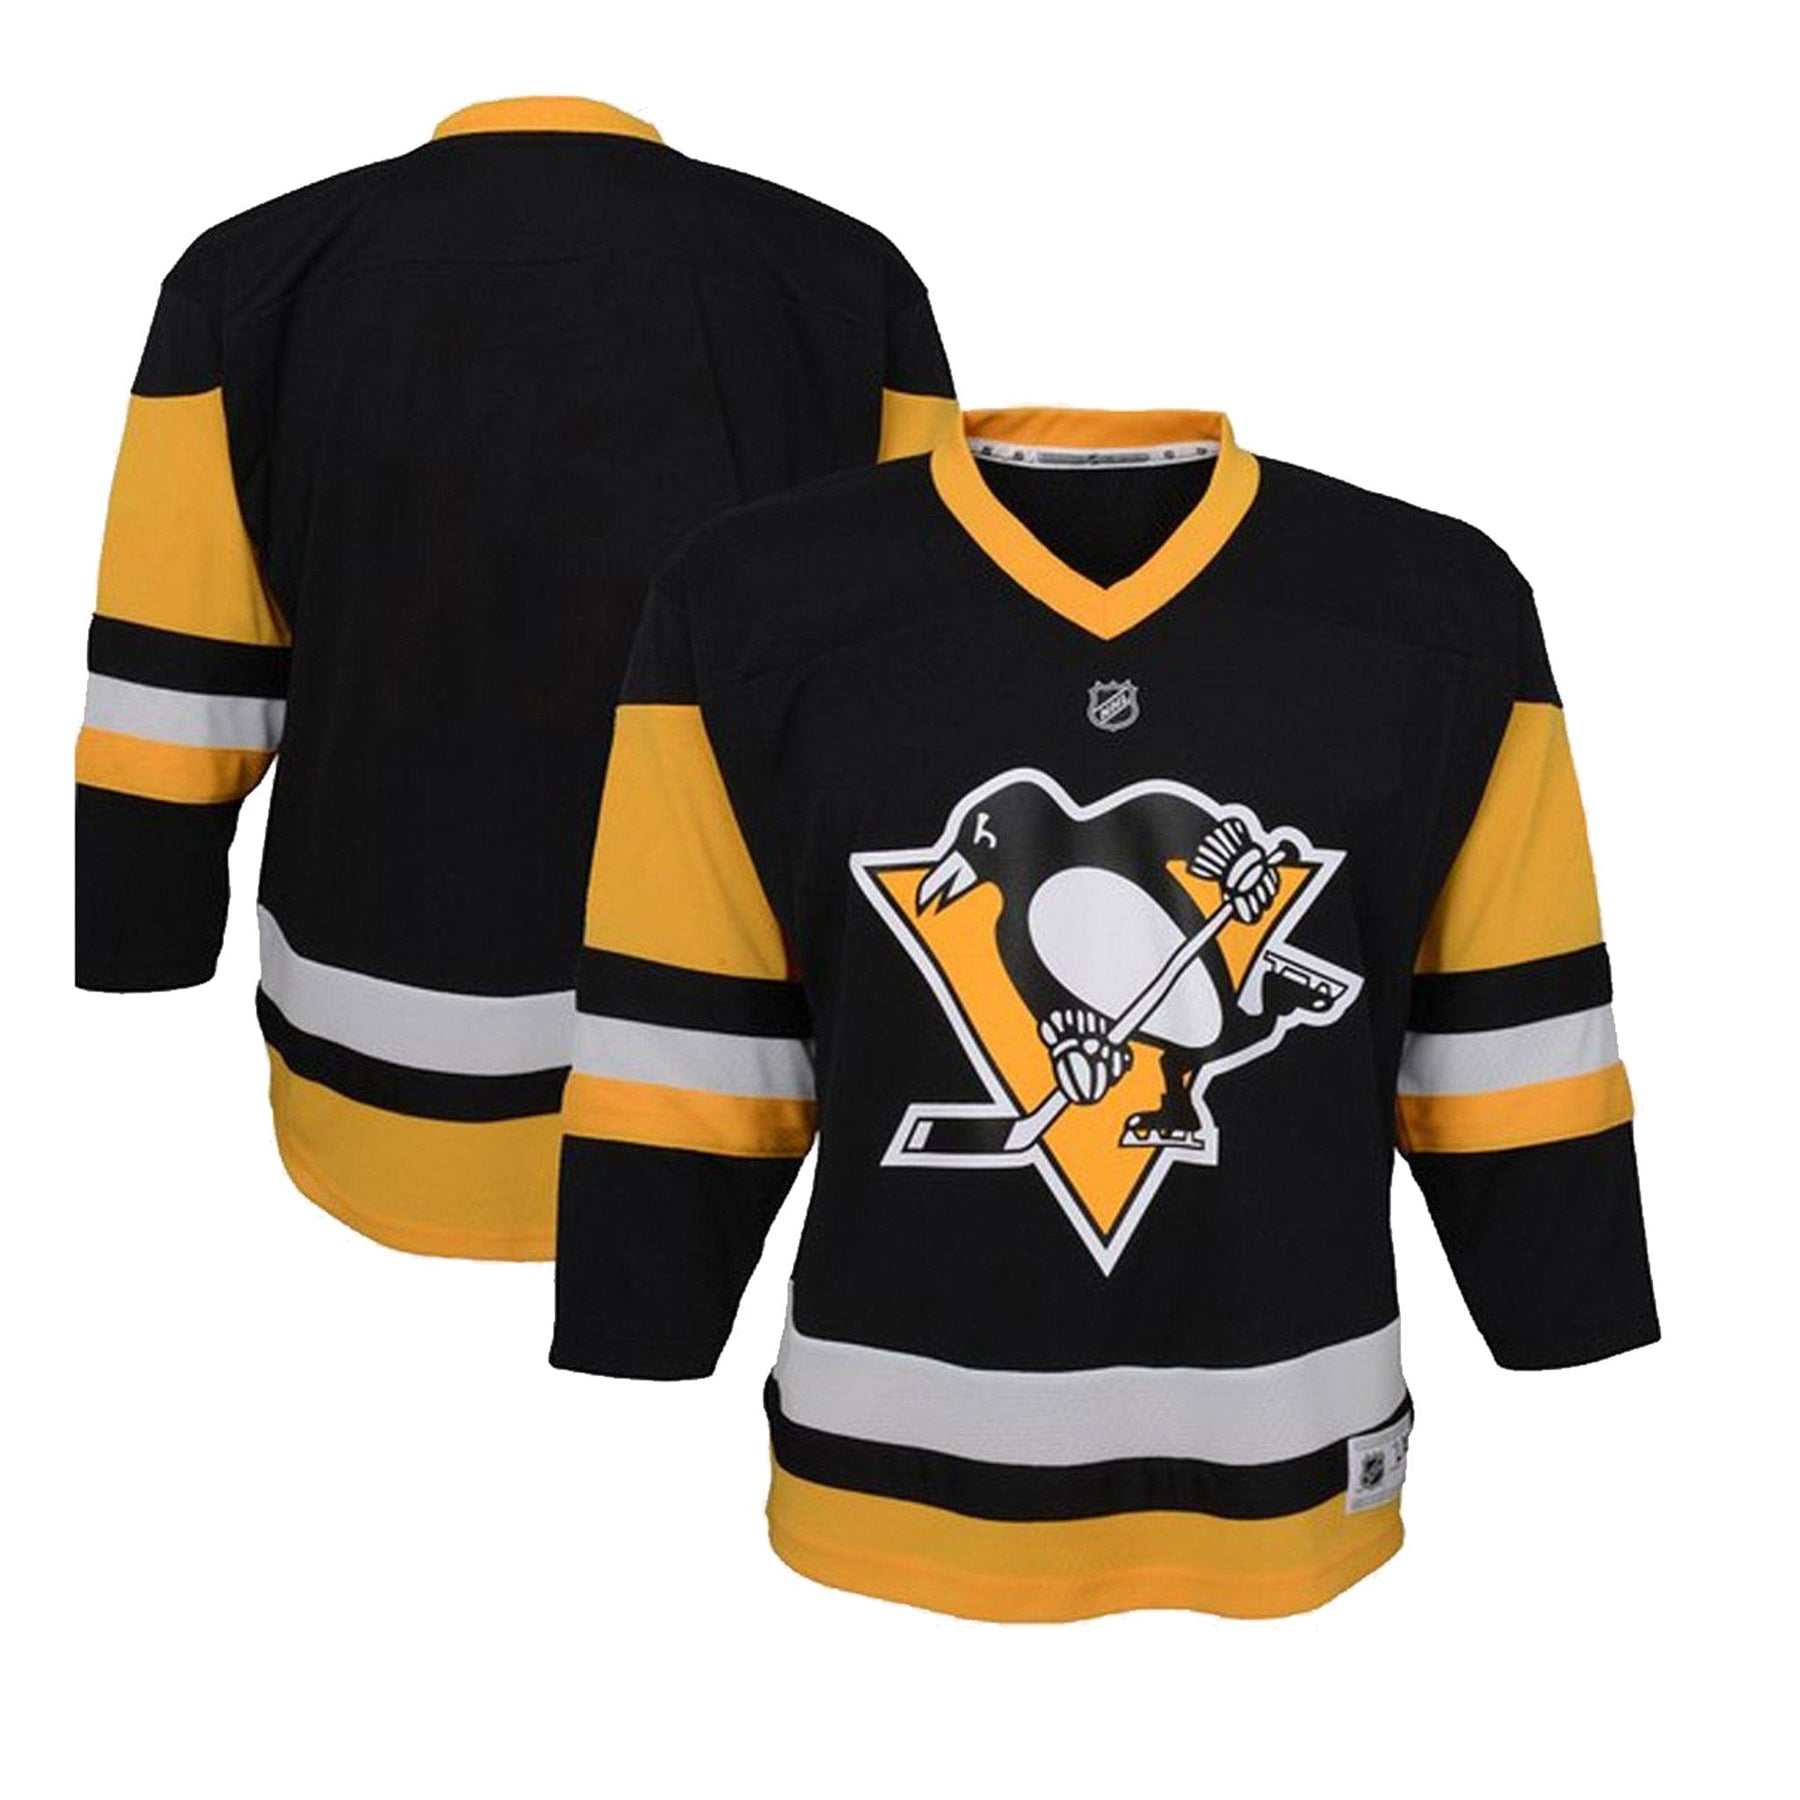 Outerstuff Reverse Retro Premier Jersey - Pittsburgh Penguins